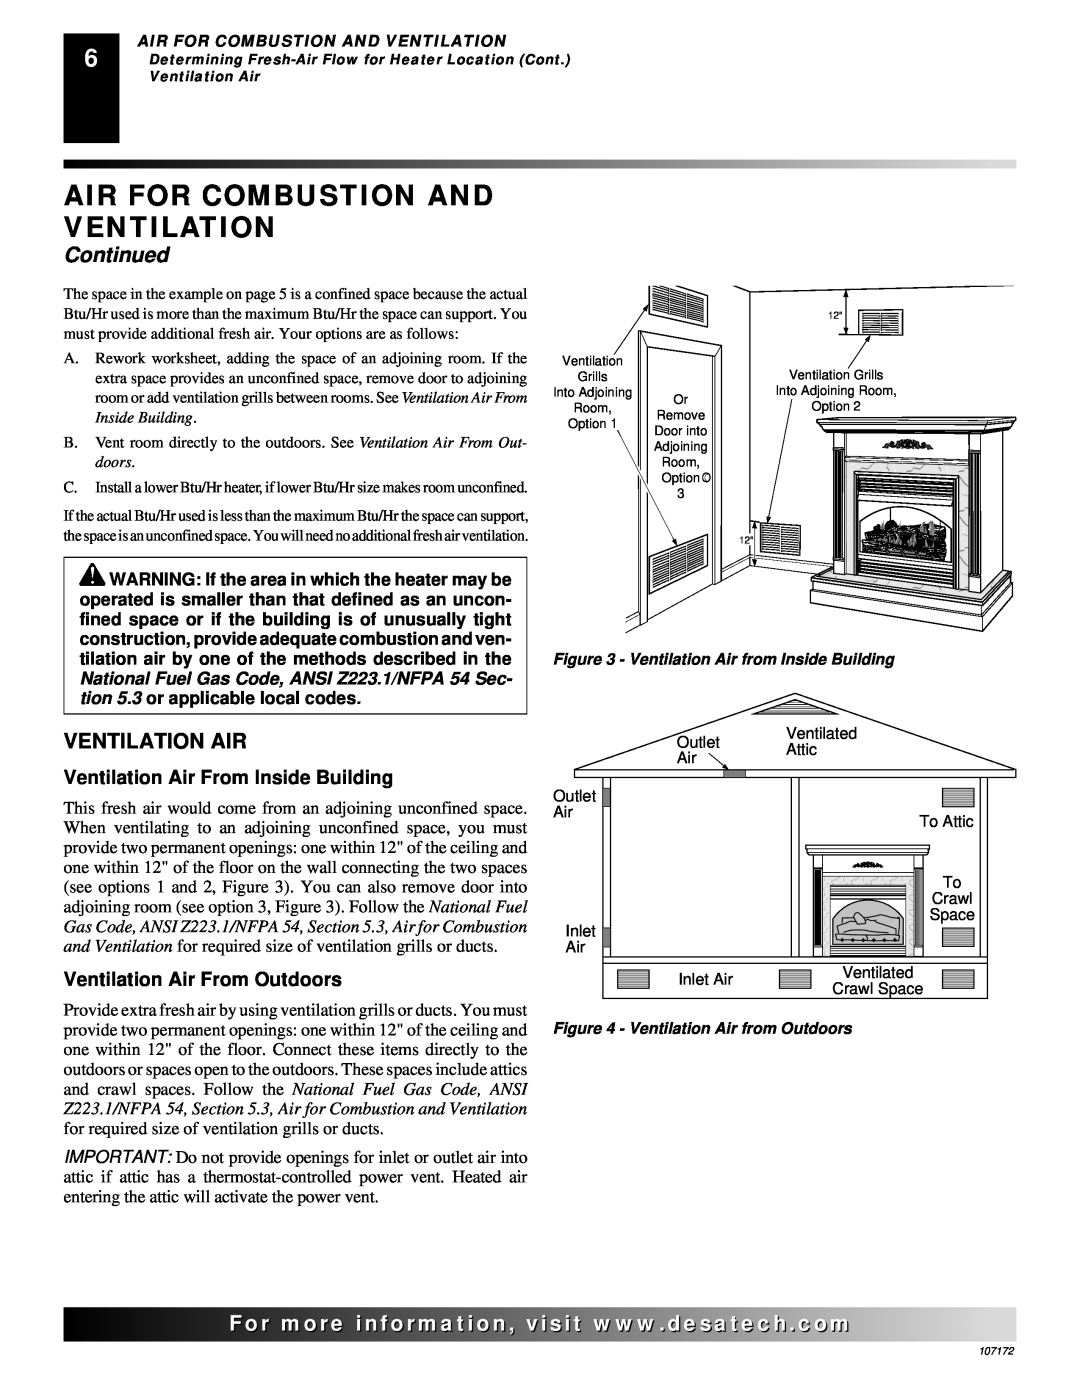 Desa EFS33NR Ventilation Air From Inside Building, Ventilation Air From Outdoors, Air For Combustion And Ventilation 